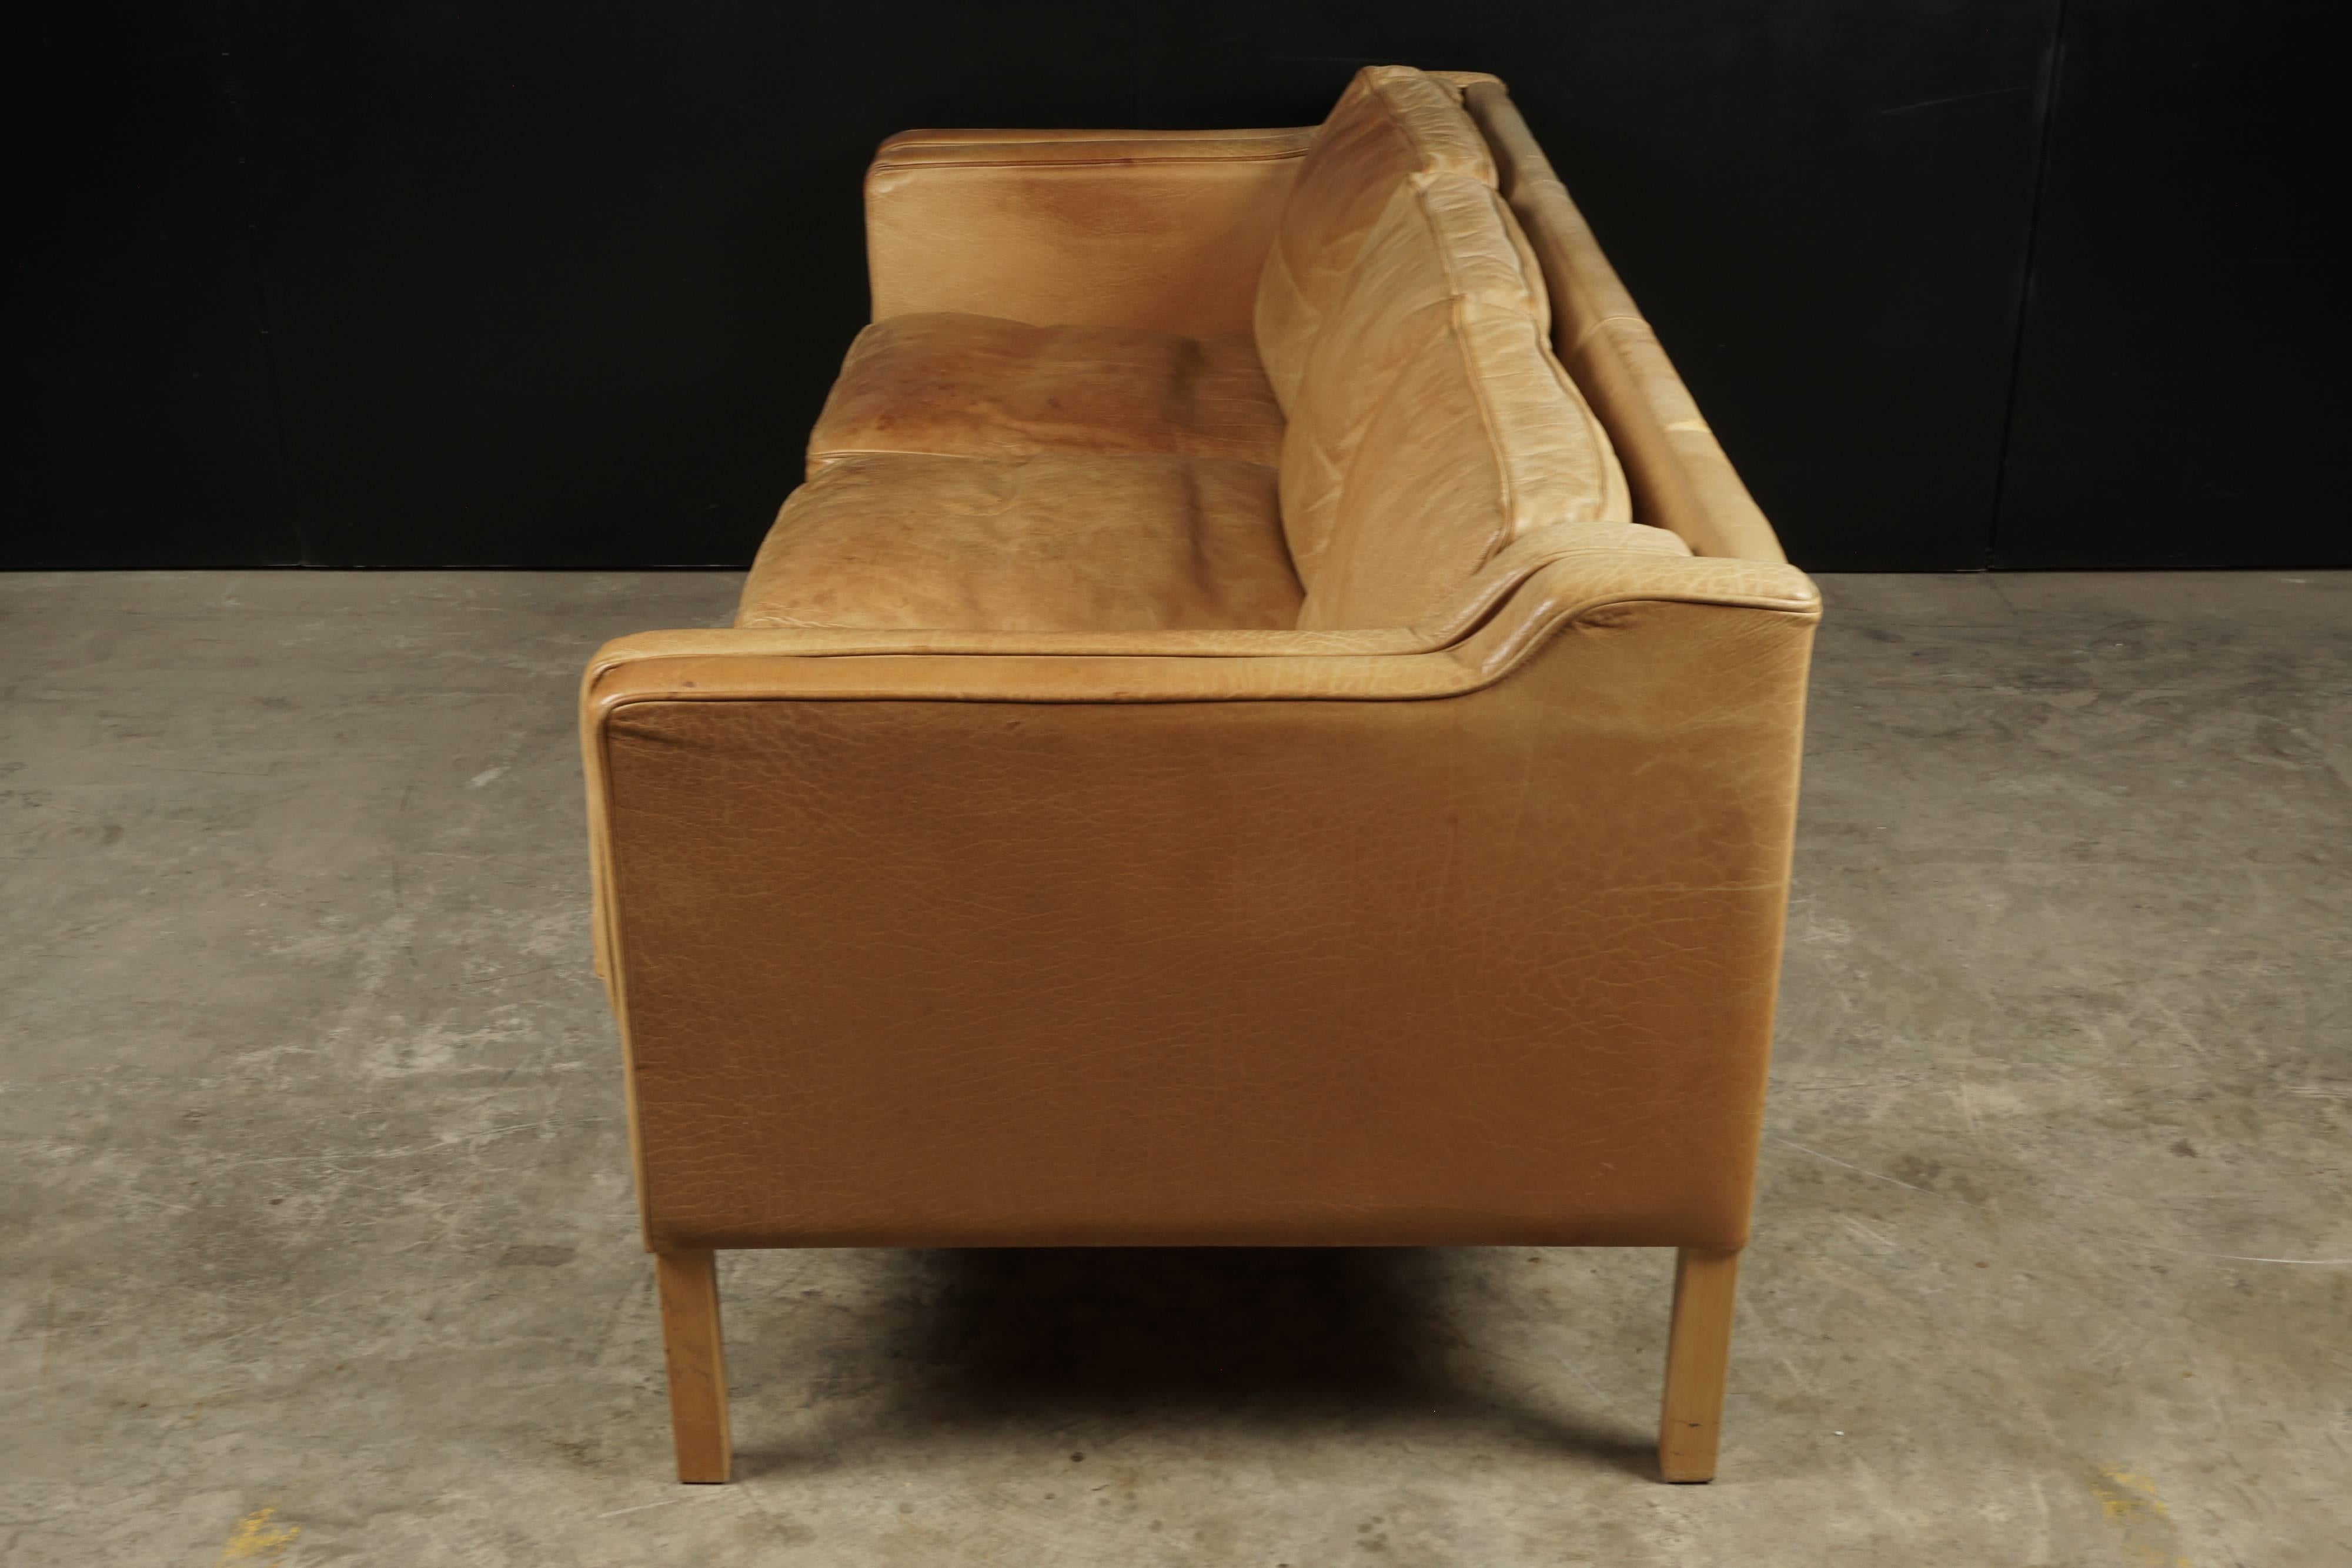 European Midcentury Leather Sofa from Denmark, circa 1970